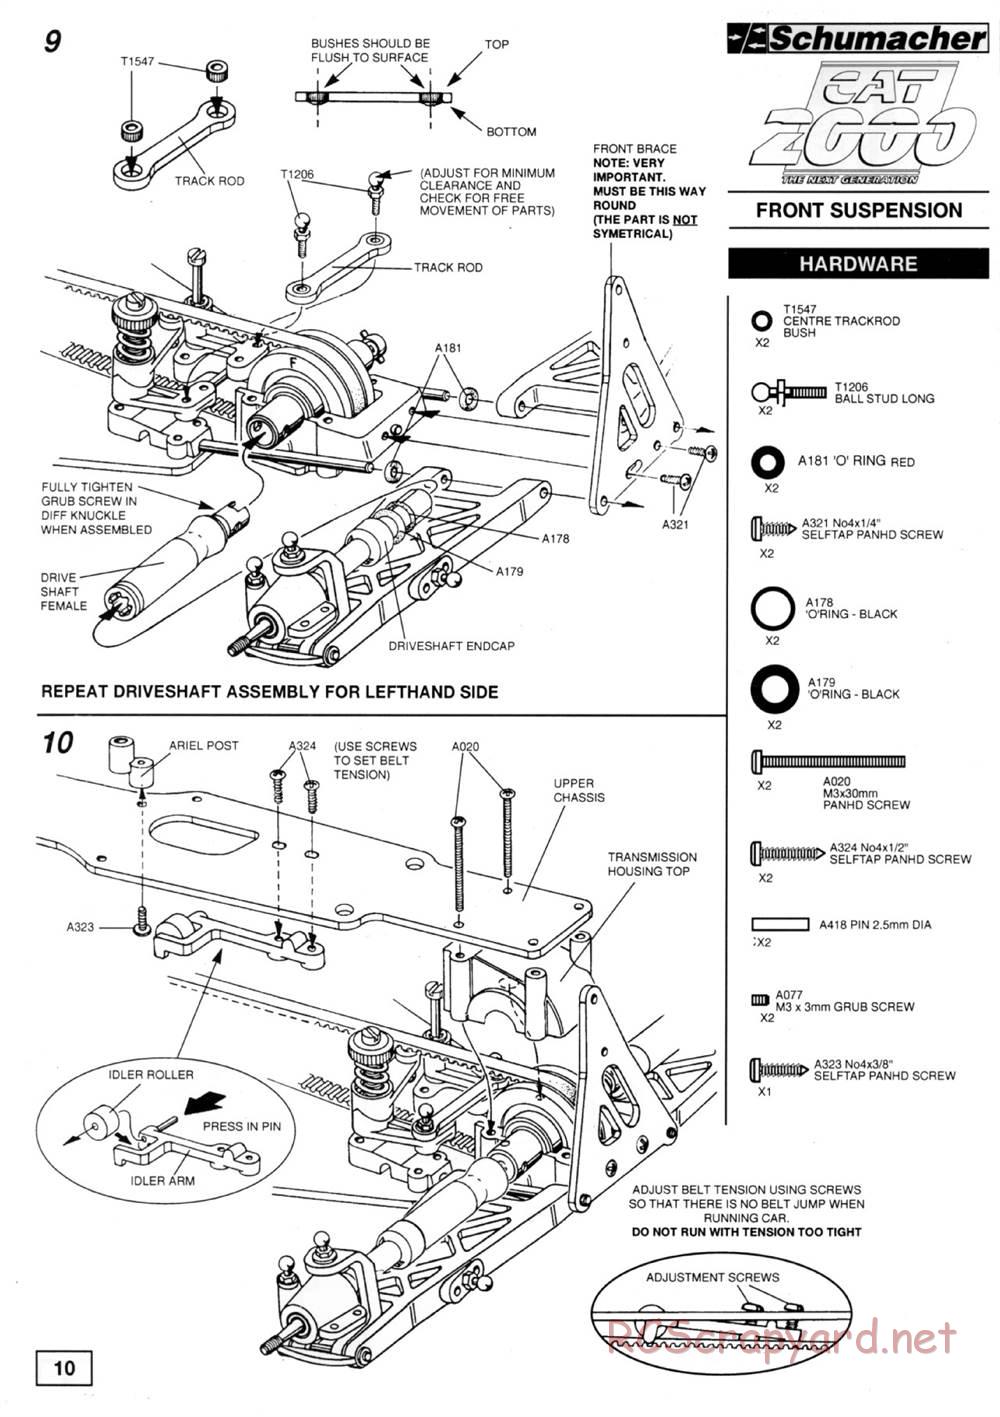 Schumacher - Cat 2000 - Manual - Page 12